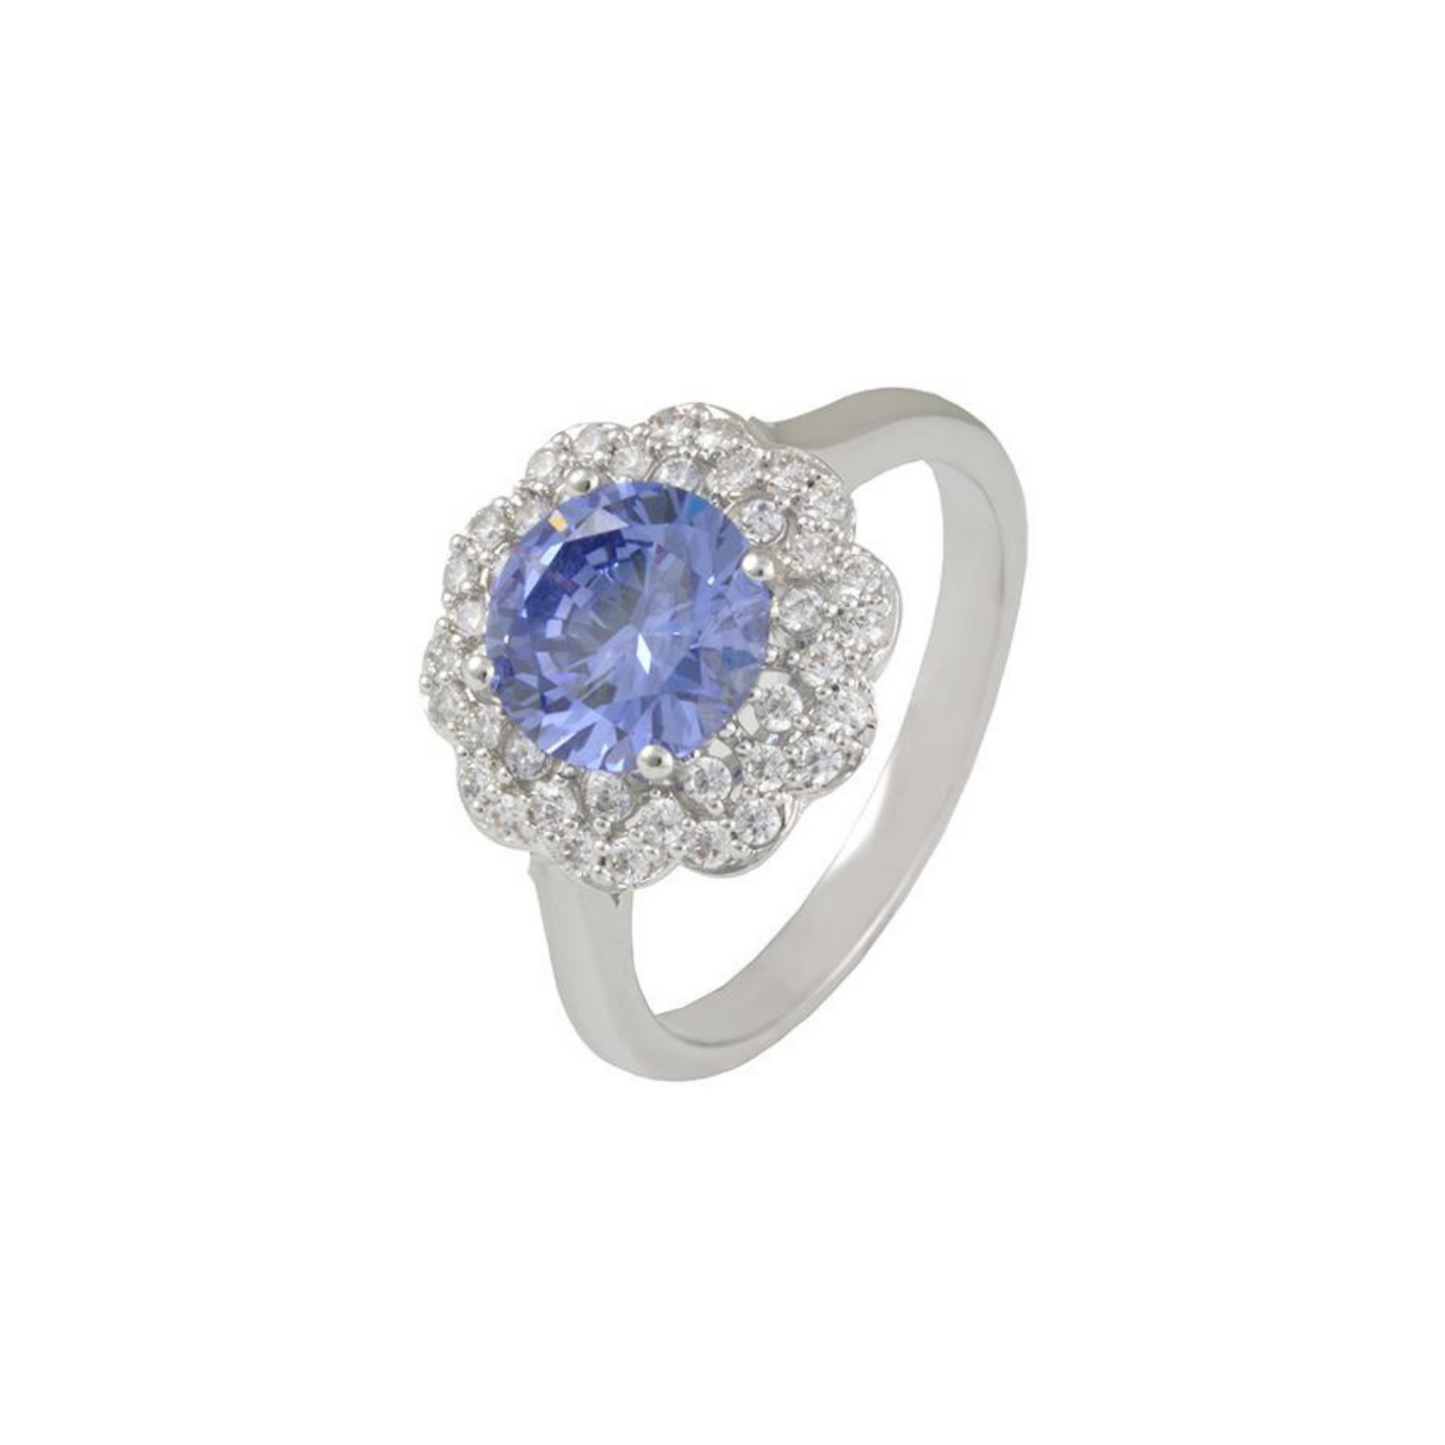 Tory 1.75 Ct. Round CZ Sapphire Ring, Silver - Zahra Jewelry